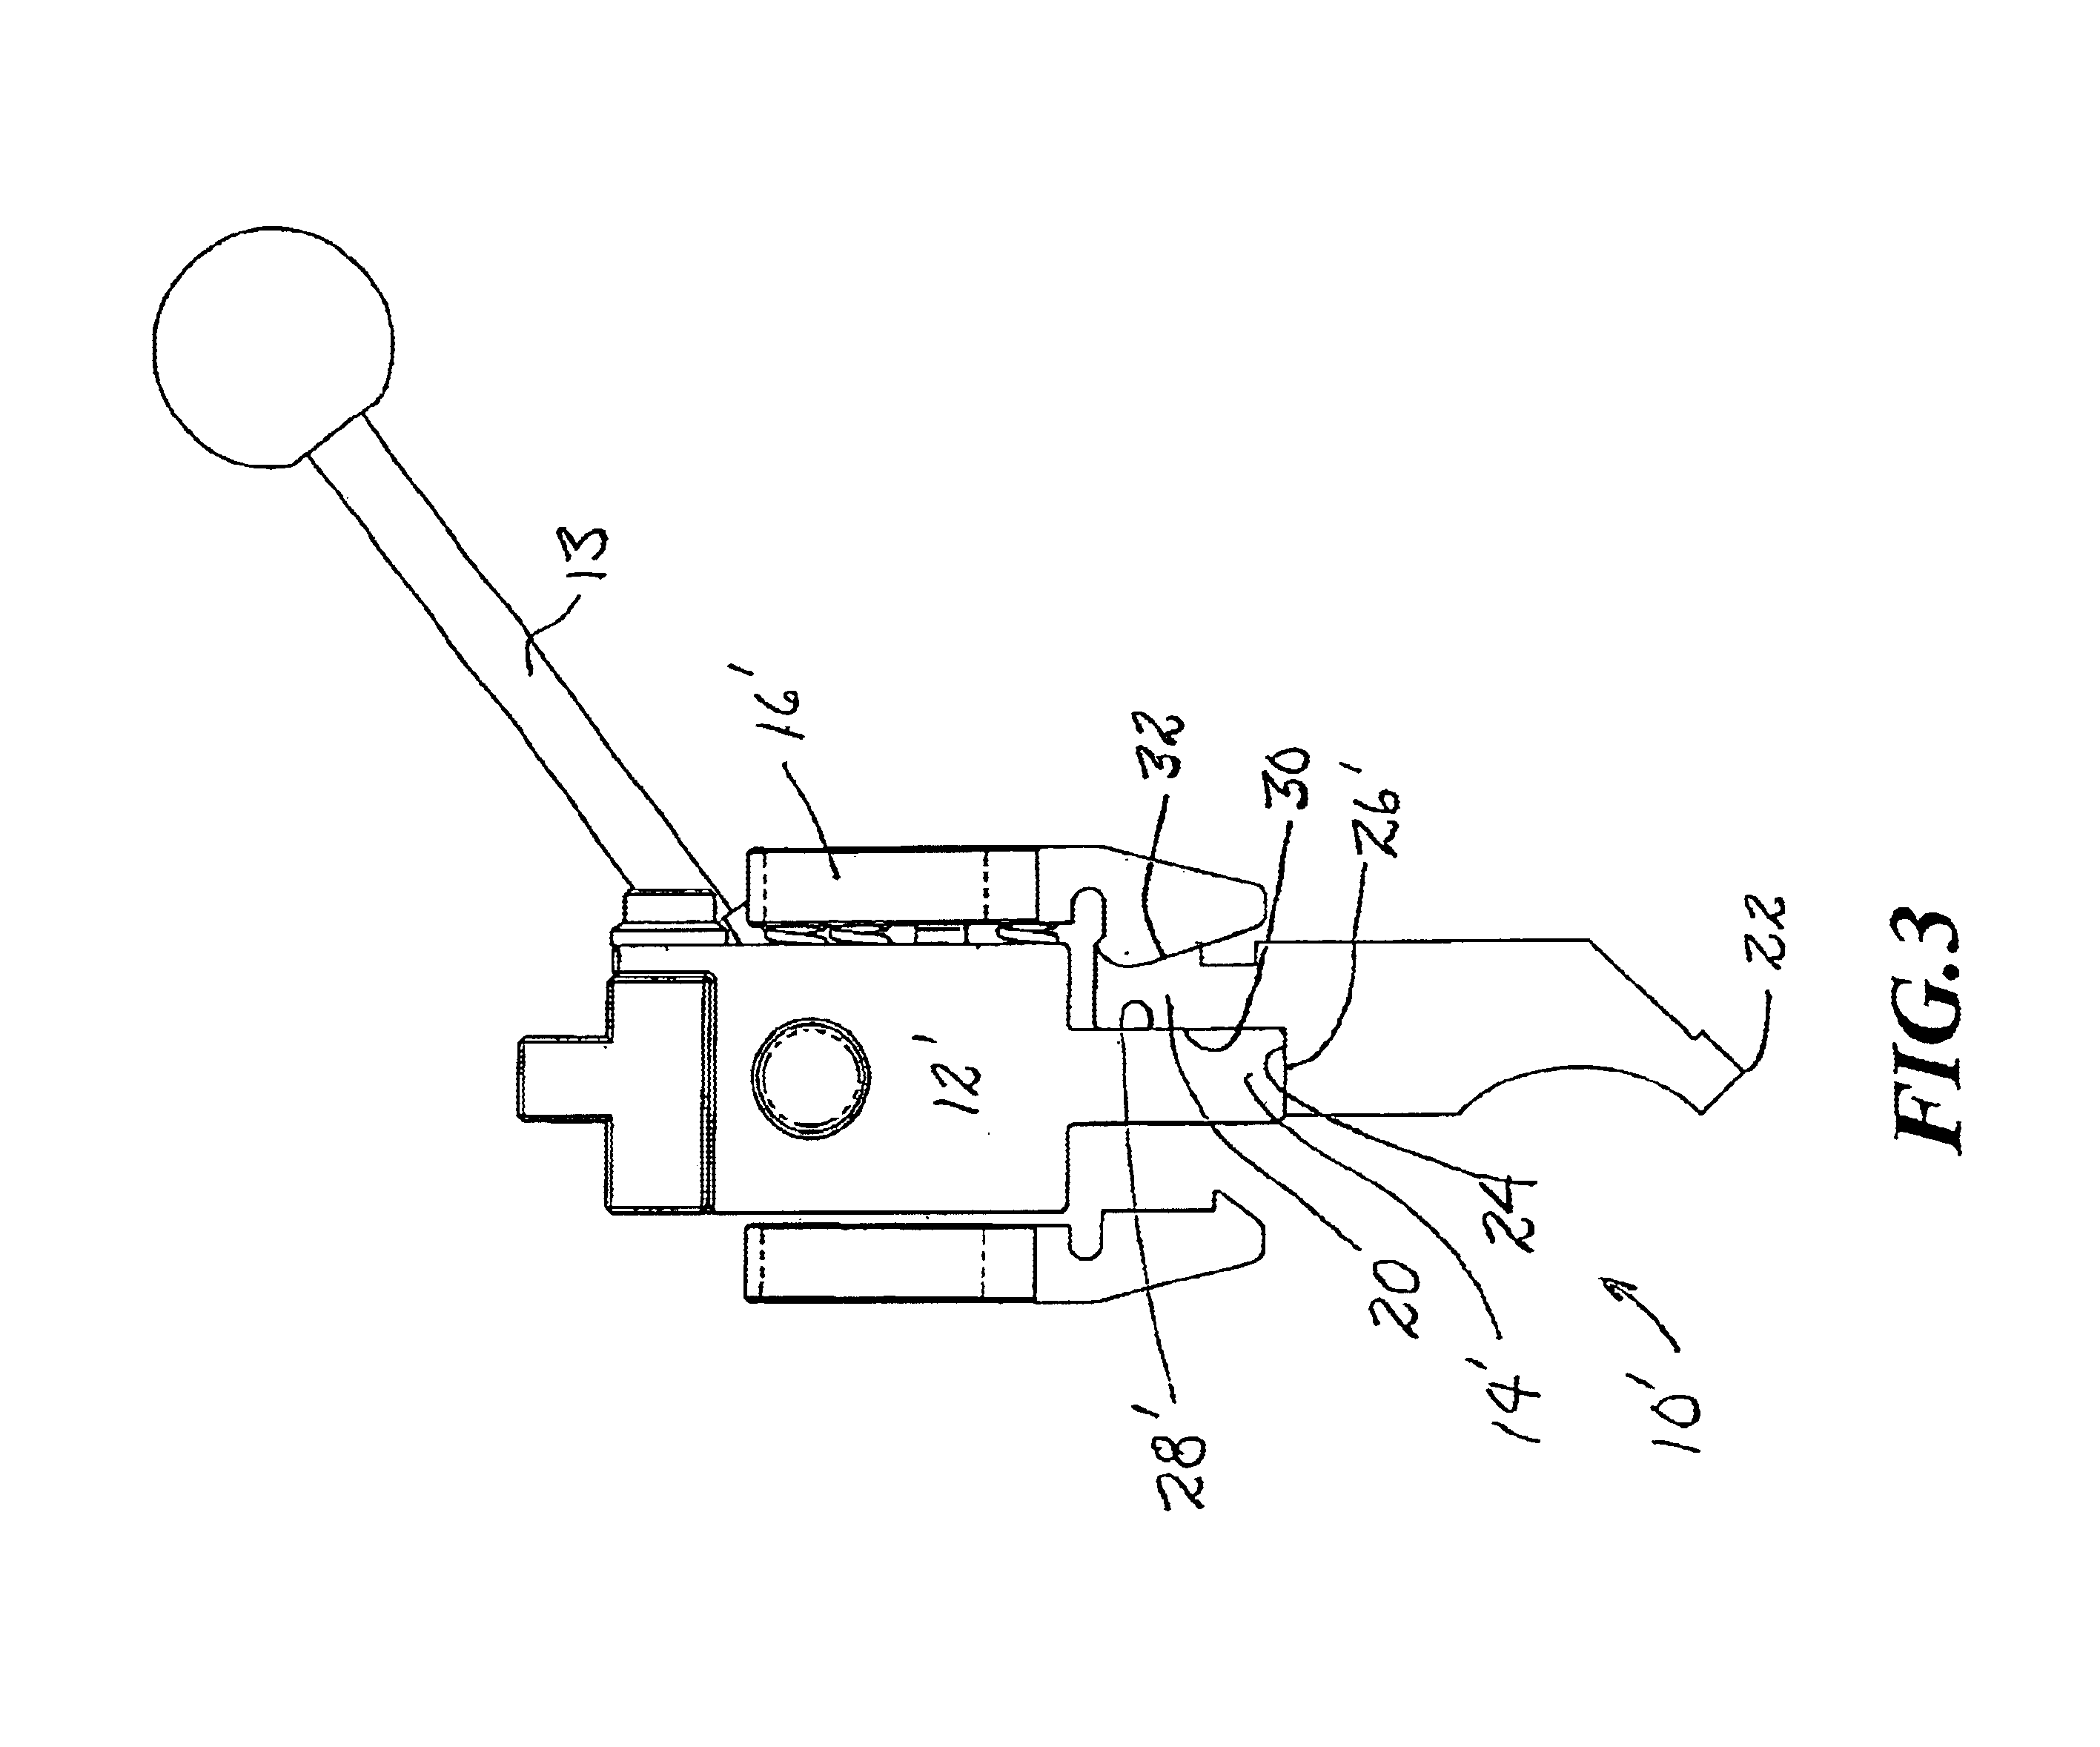 Press brake tool and tool holder